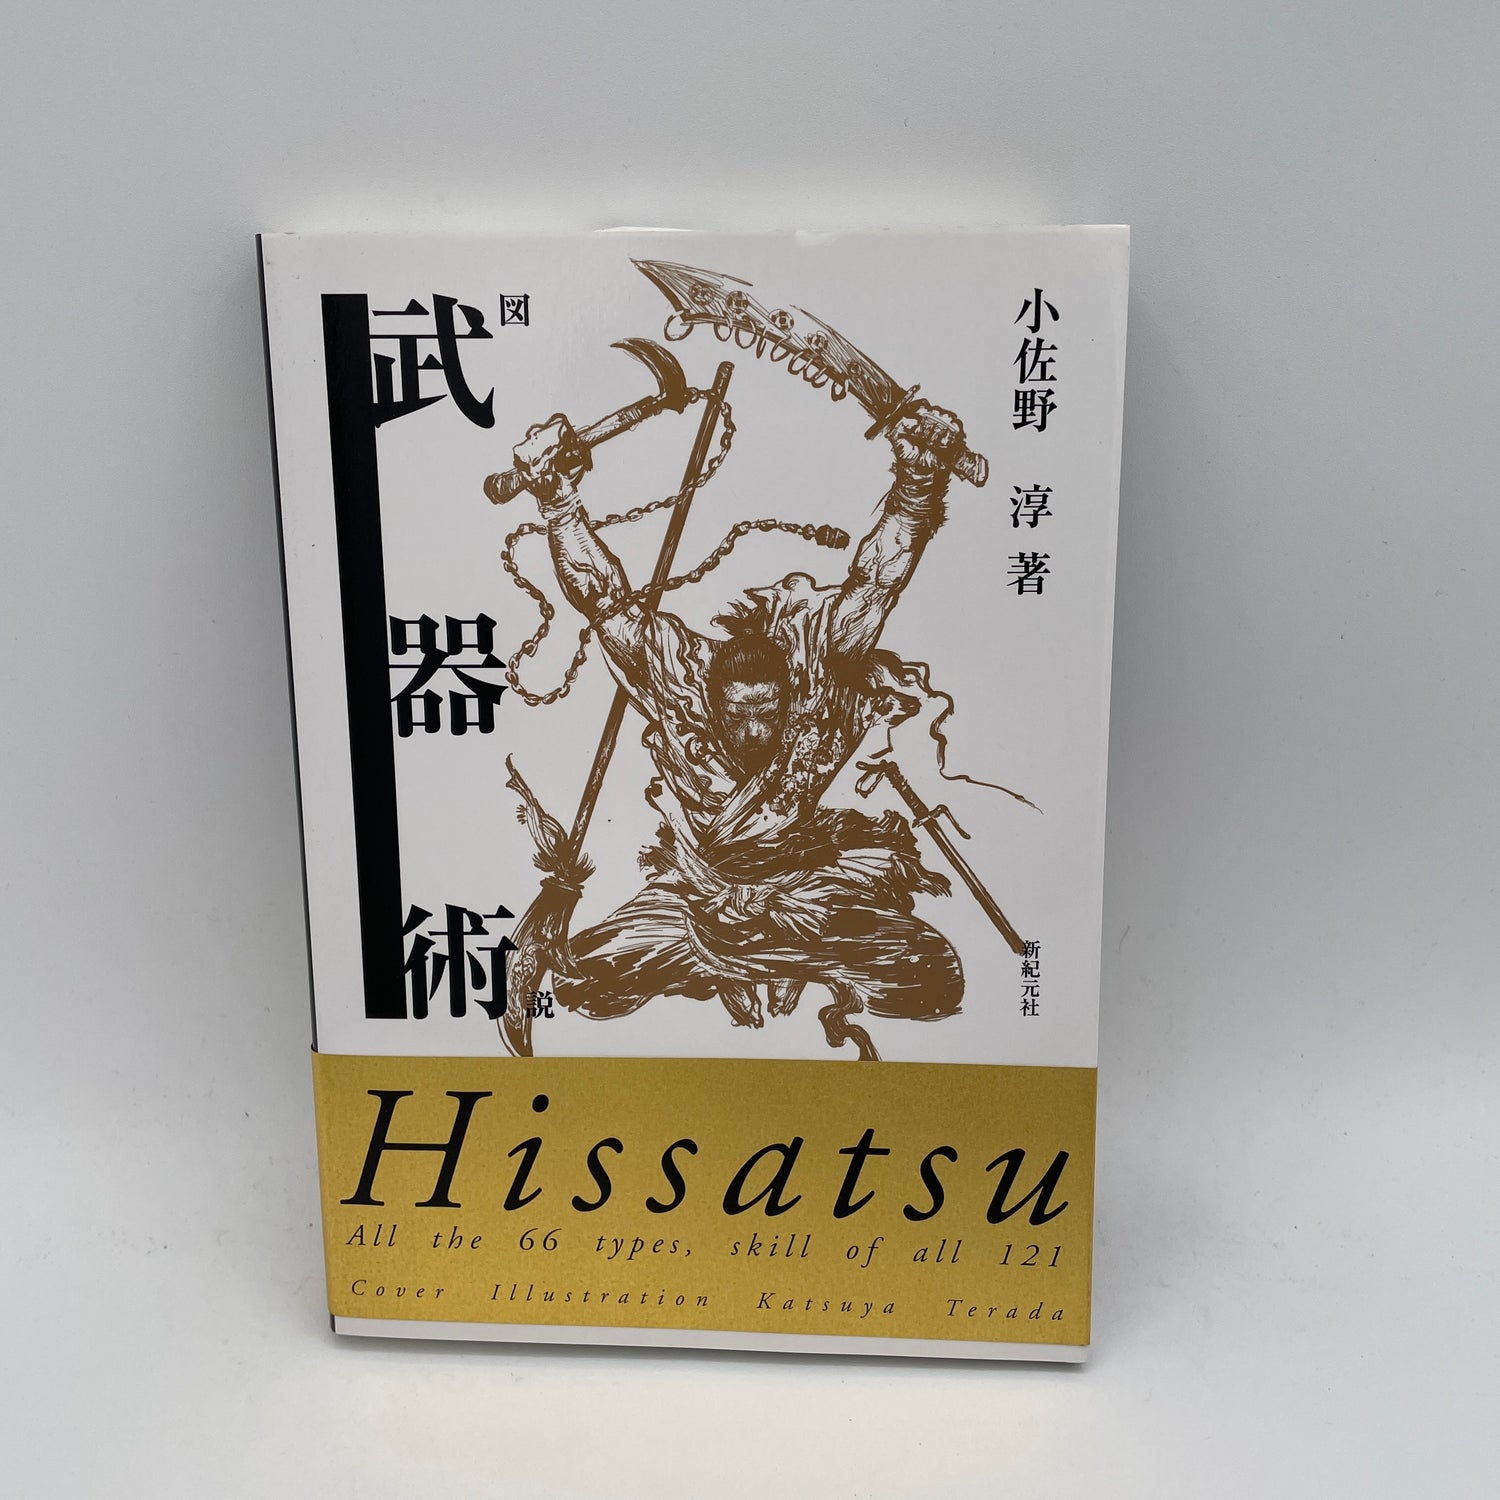 Illustrated Bukijutsu (Weapons) Book by Jun Osano